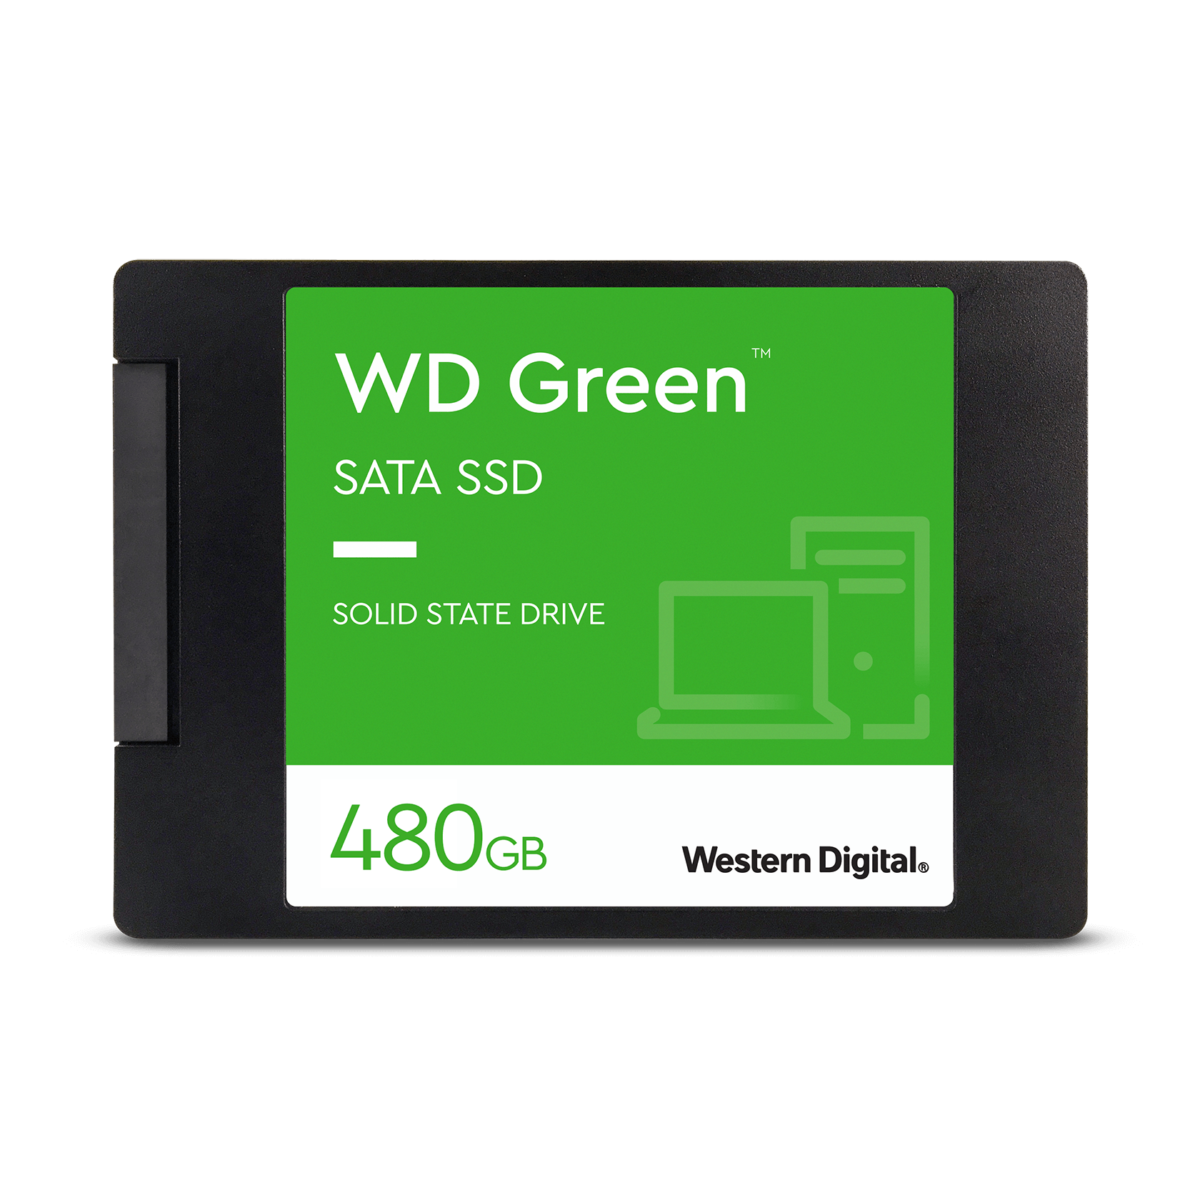 Western Digital 480GB WD Green Internal PC SSD Solid State Drive – SATA III 6 Gb/s, 2.5″/7mm, Up to 550 MB/s